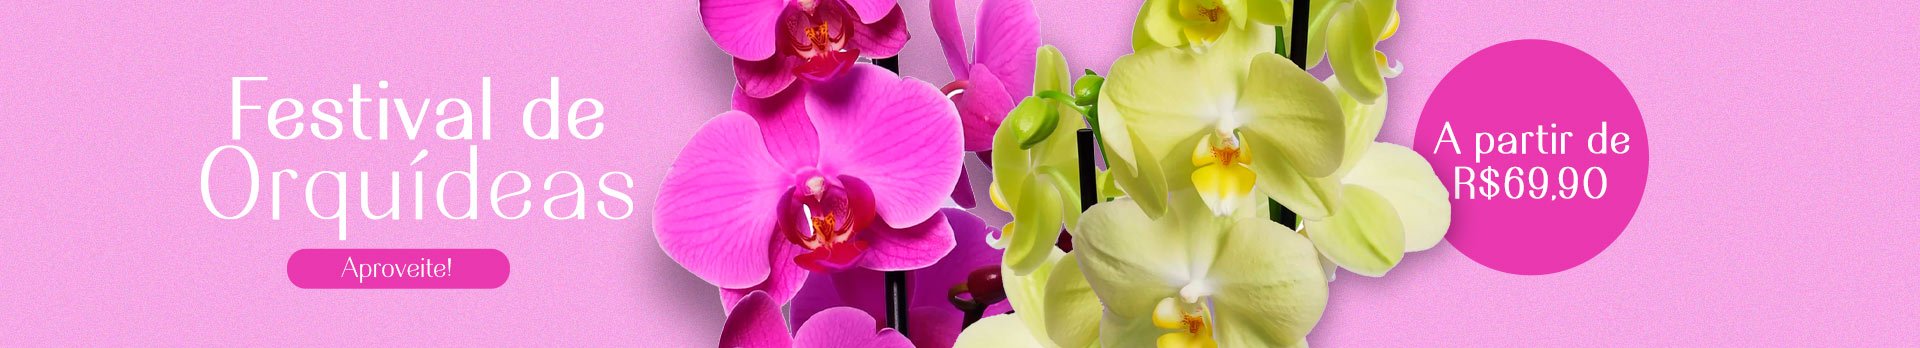 Promo Orquídeas a partir de 69,90 - Super